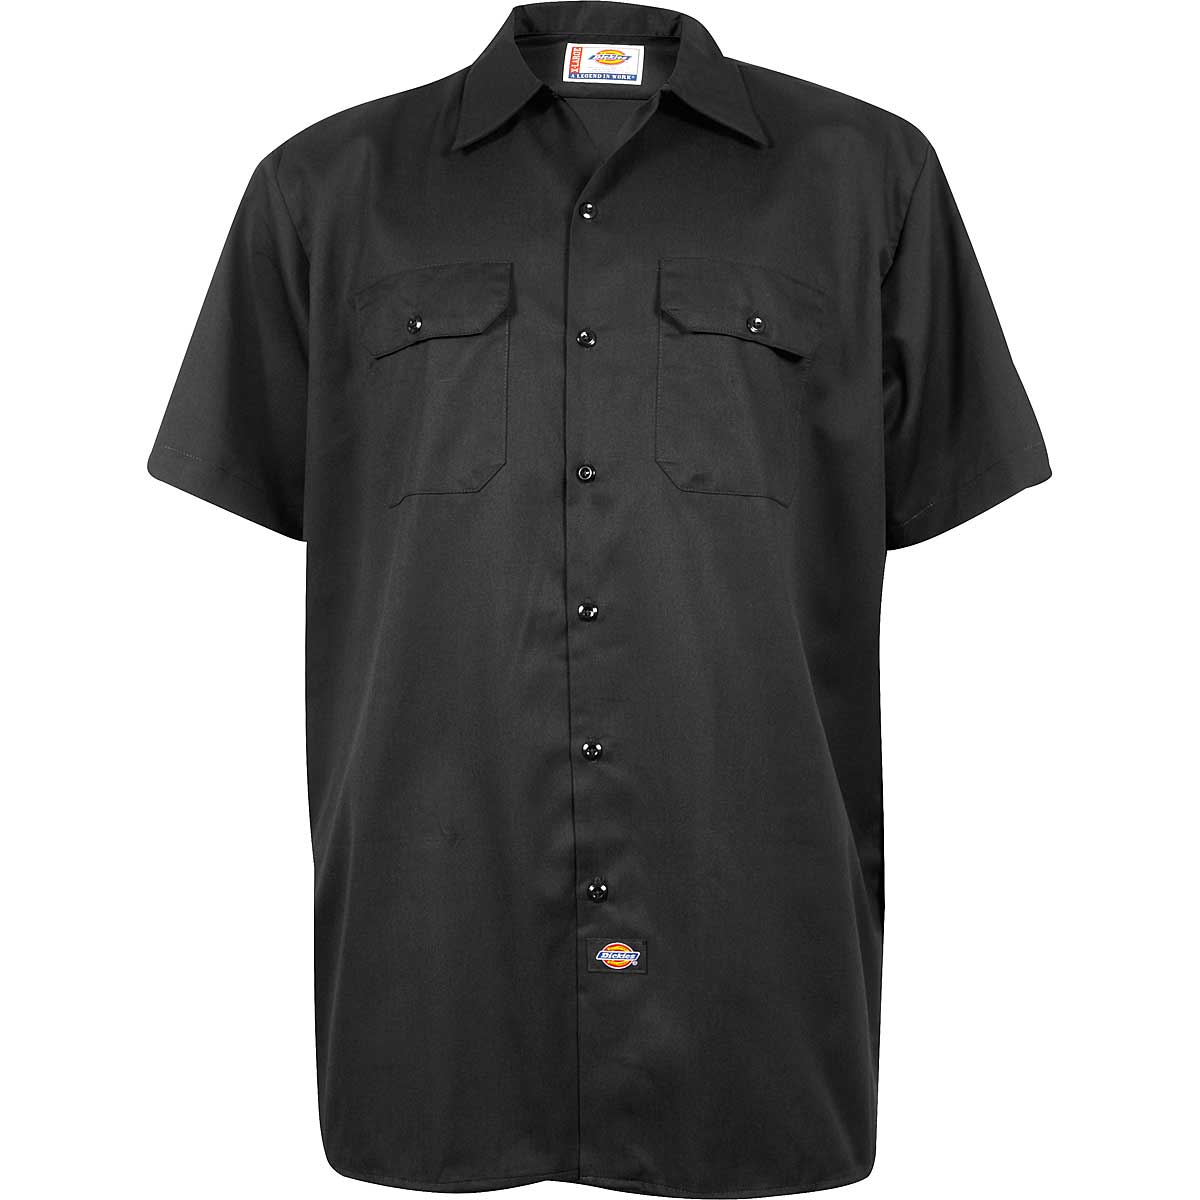 Dickies 1574 Work Shirt, Black